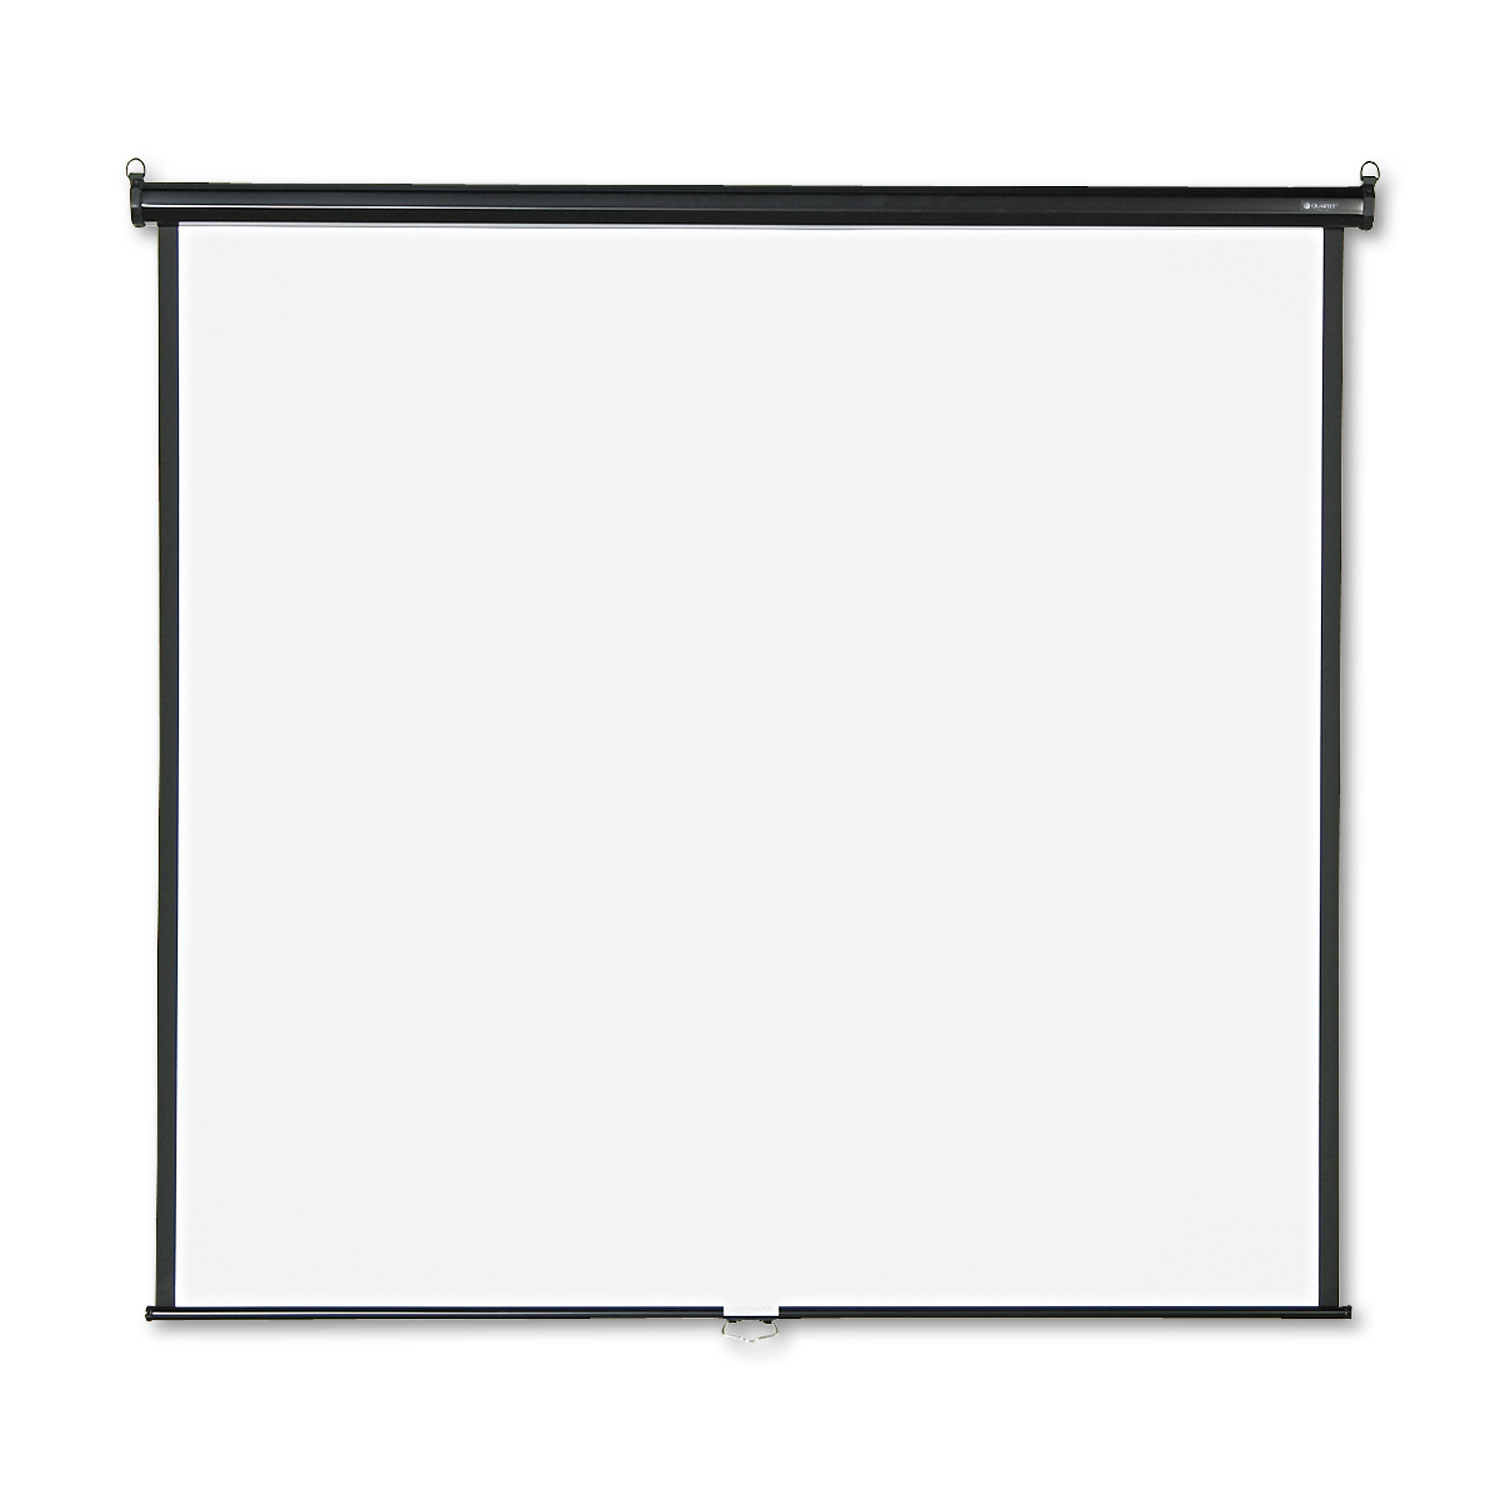  Quartet 670S Wall or Ceiling Projection Screen, 70 x 70, White Matte, Black Matte Casing (QRT670S) 